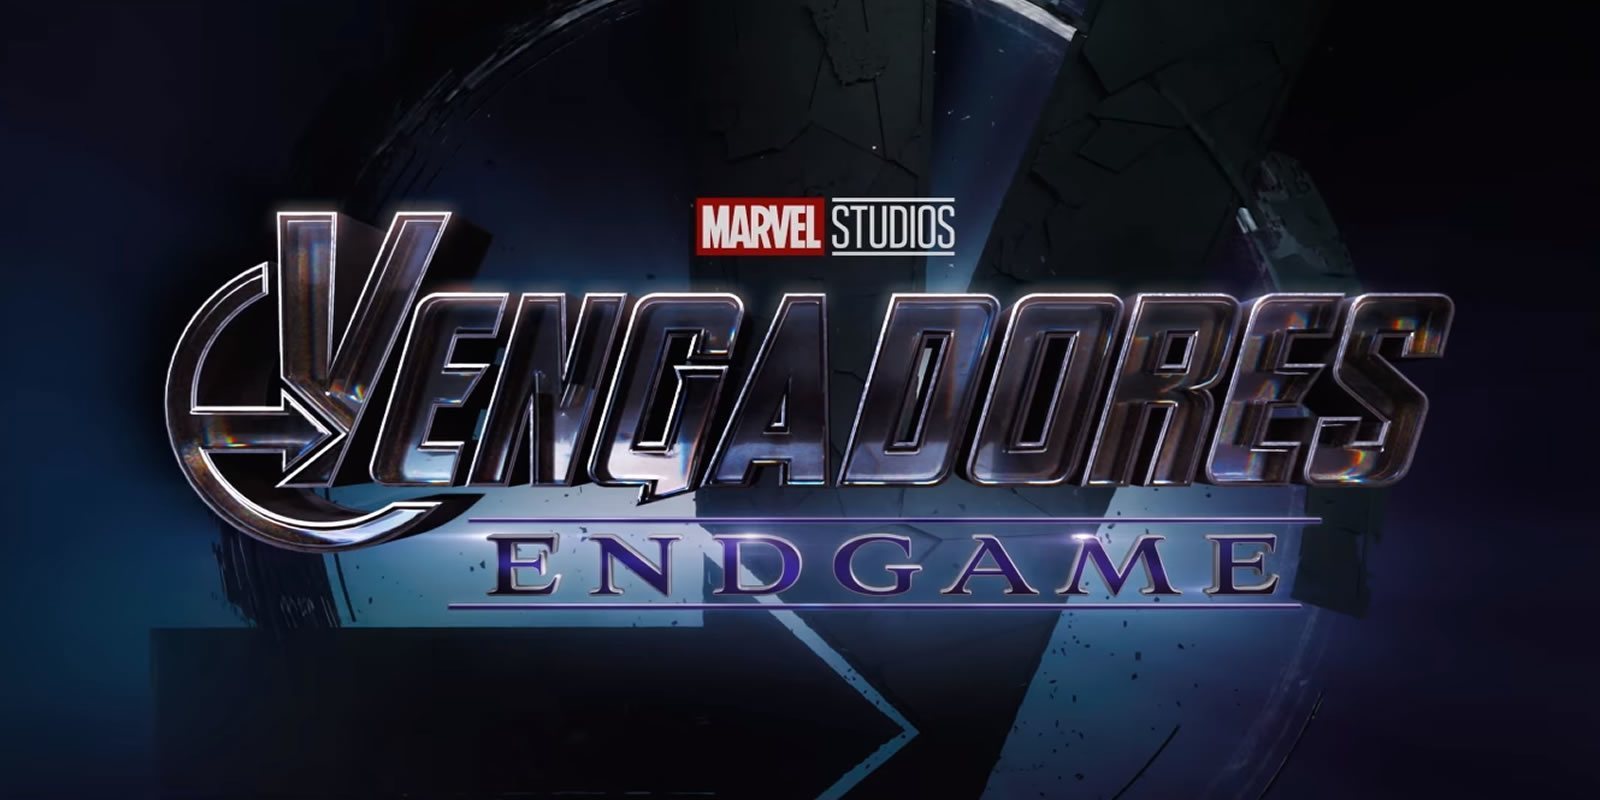 Capitana Marvel aparece, por fin, en el nuevo tráiler de 'Vengadores: Endgame'